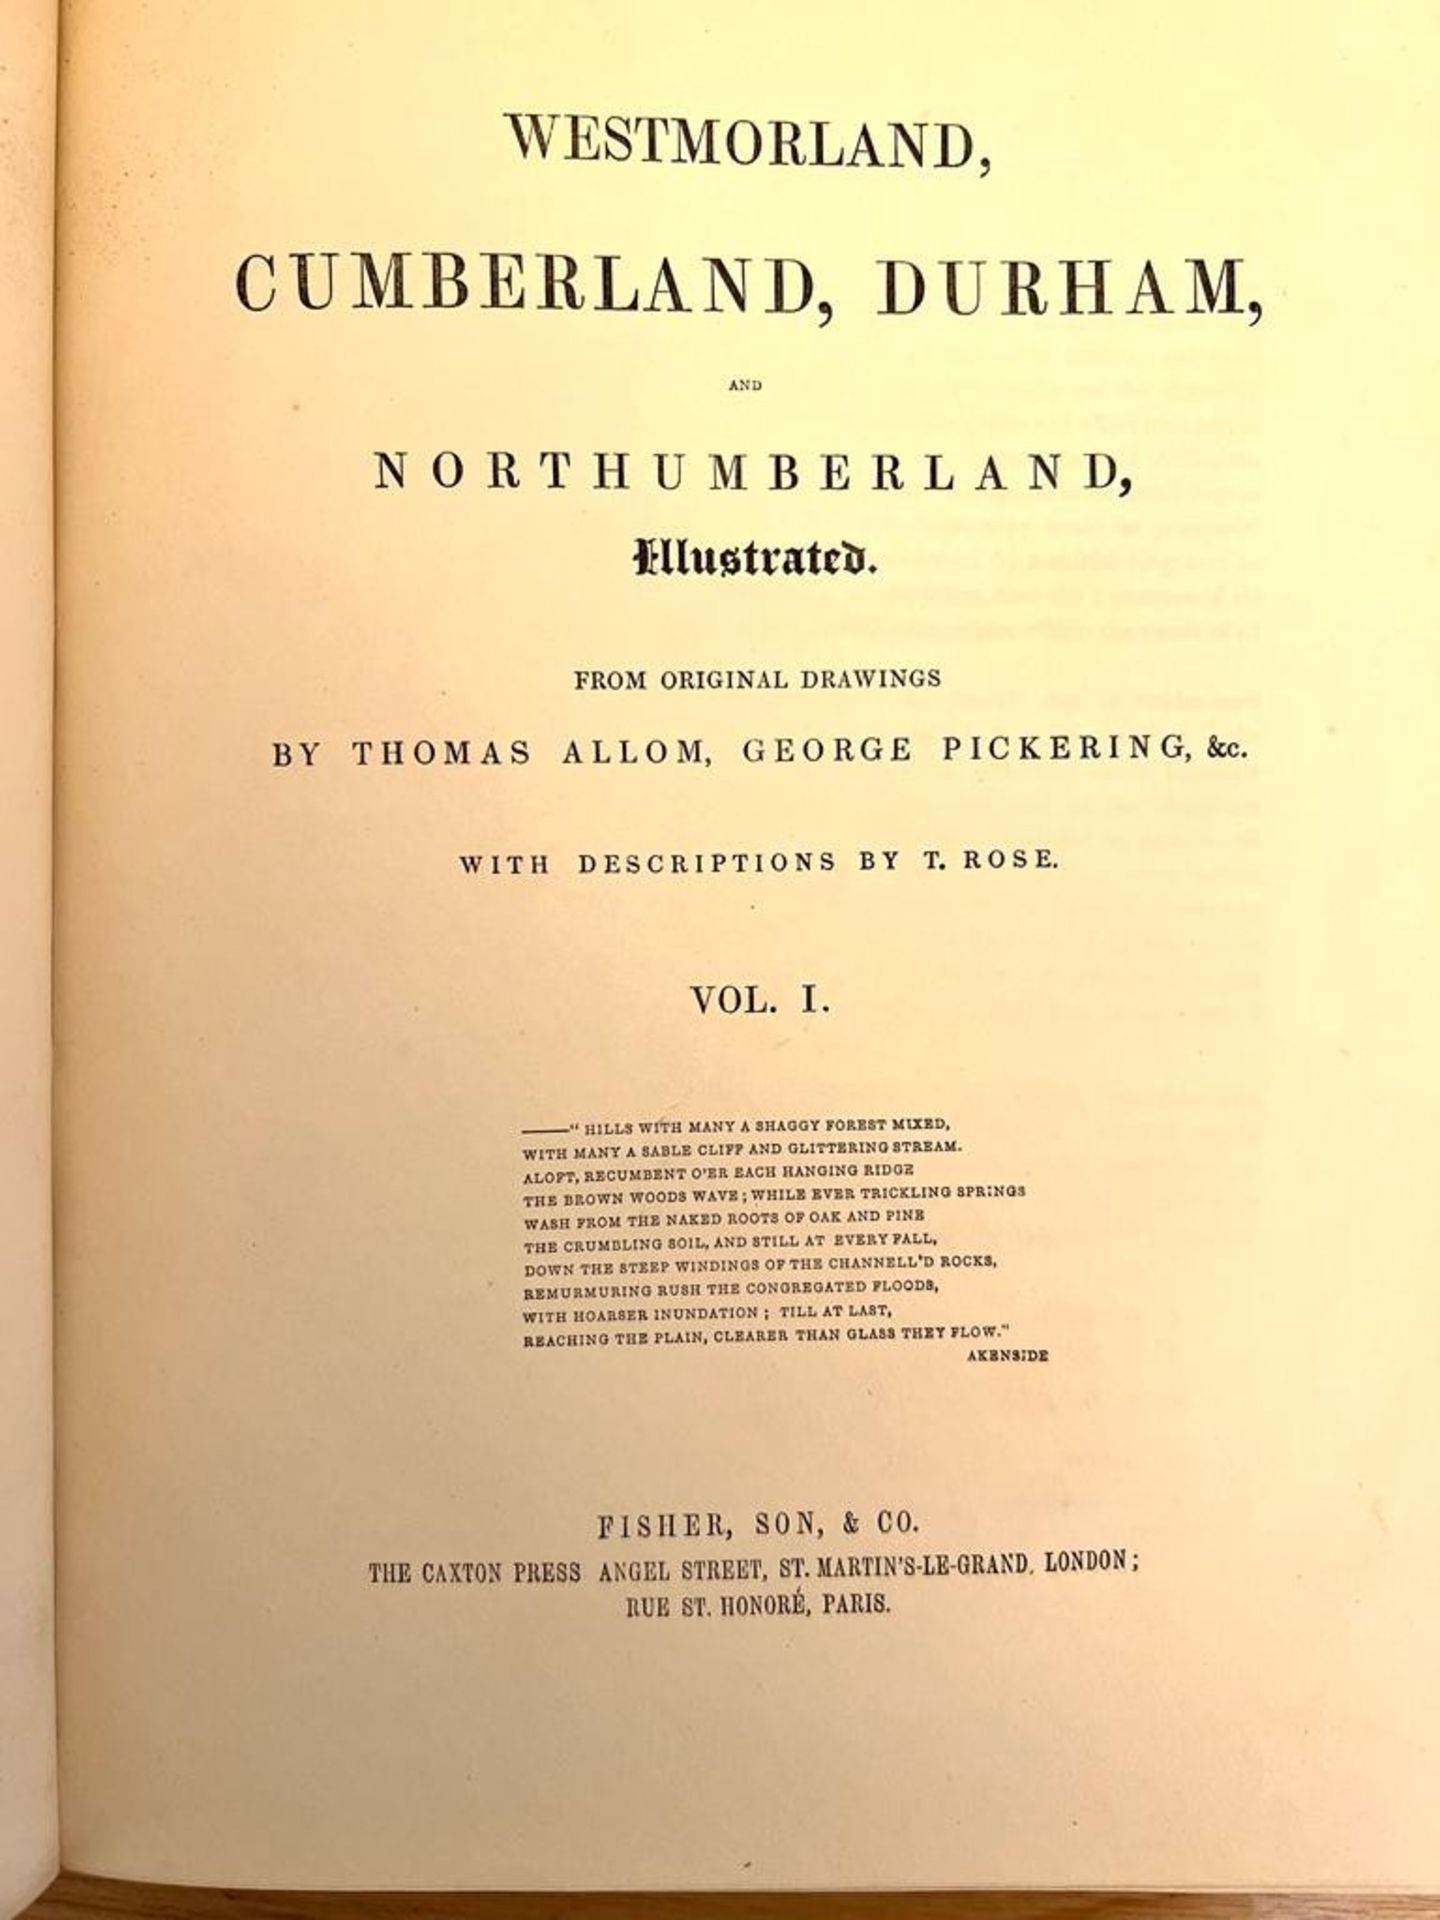 ALLOM, THOMAS, WESTMORLAND, CUMBERLAND, DURHAM, ILLUSTRATED 1832, THREE VOLUMES, CLOTH BACKS - Image 2 of 5